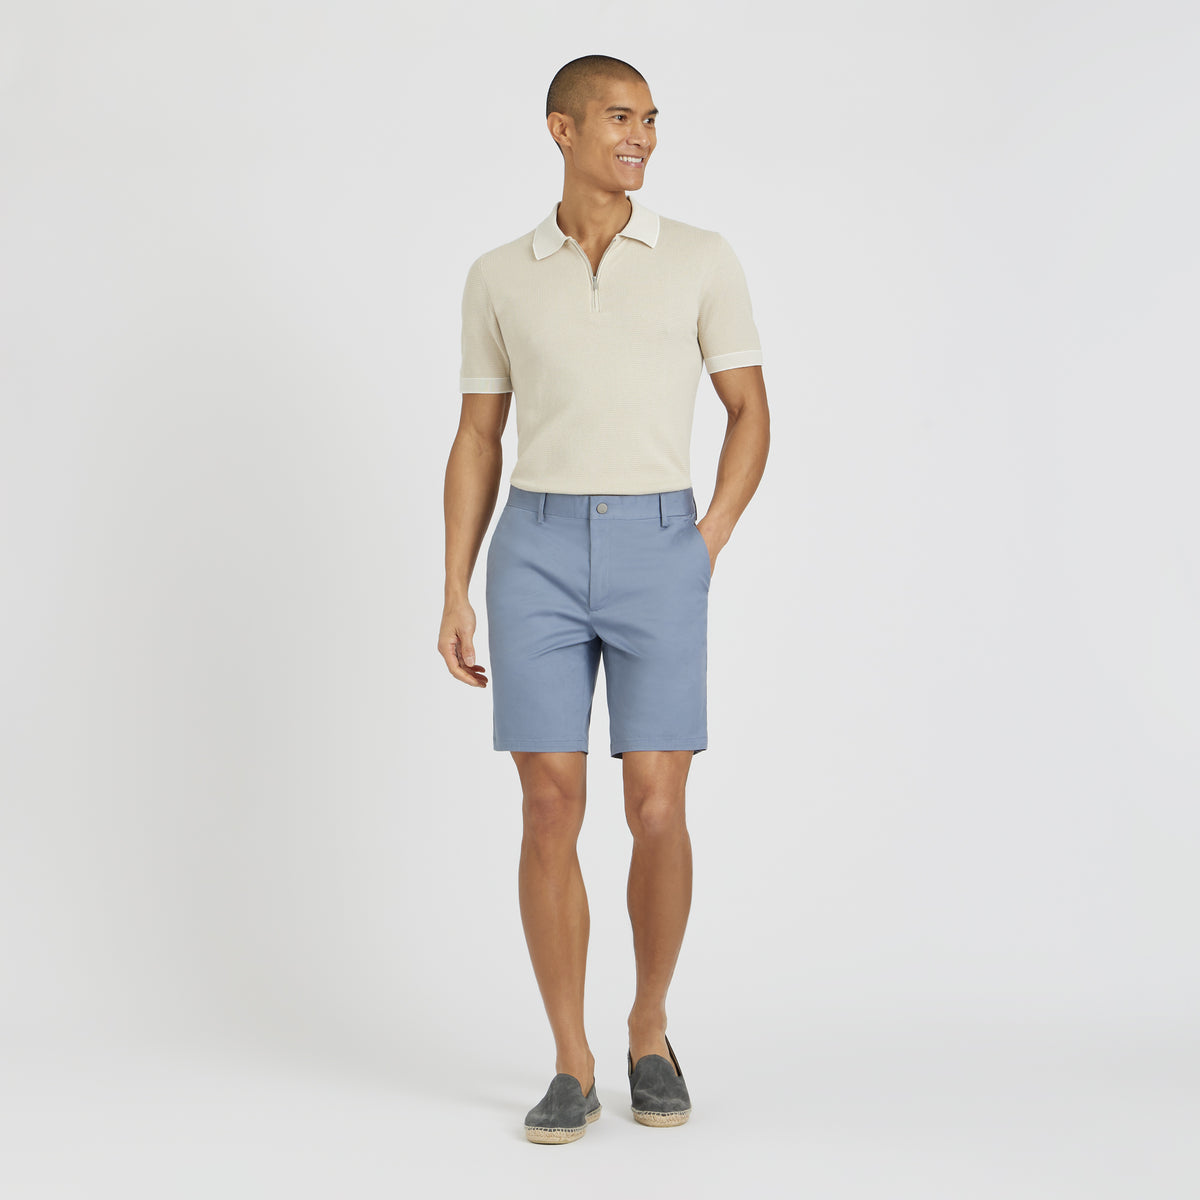 Storm Blue Sharp Shorts - Men's Bespoke Cotton Shorts - SPOKE - SPOKE